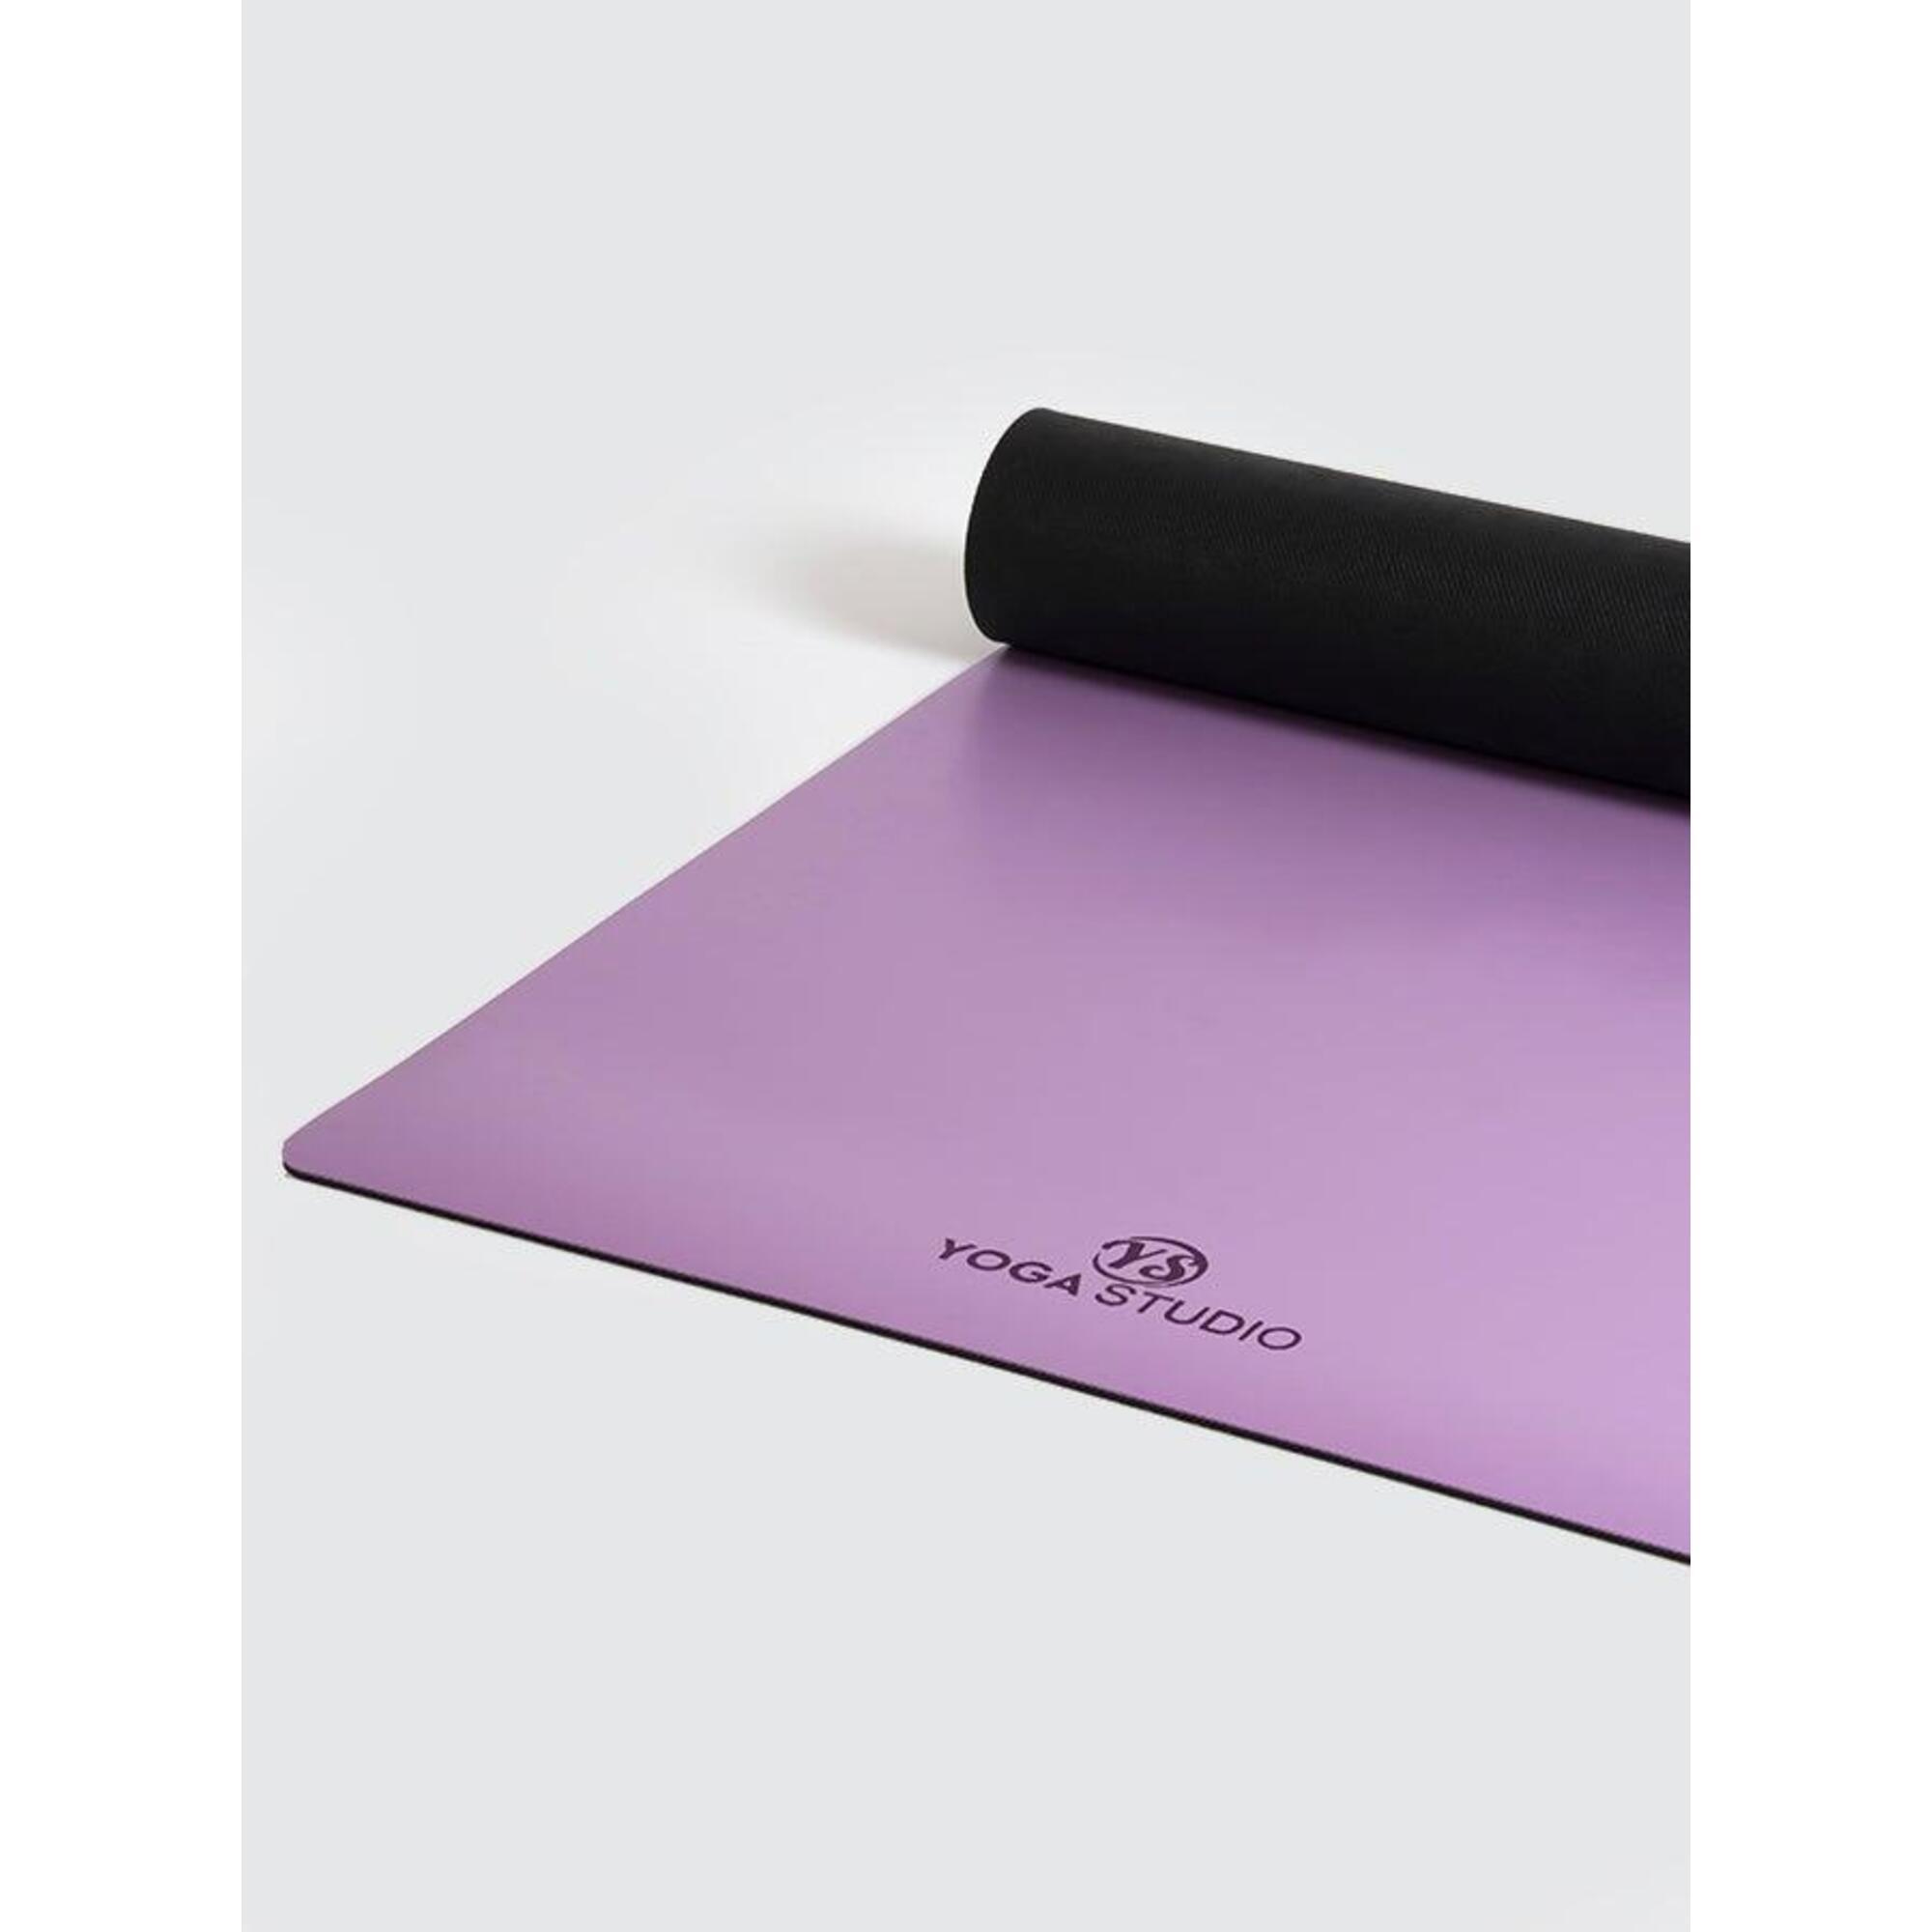 Yoga Studio The Grip Compact Yoga Mat 4mm - Purple 3/4